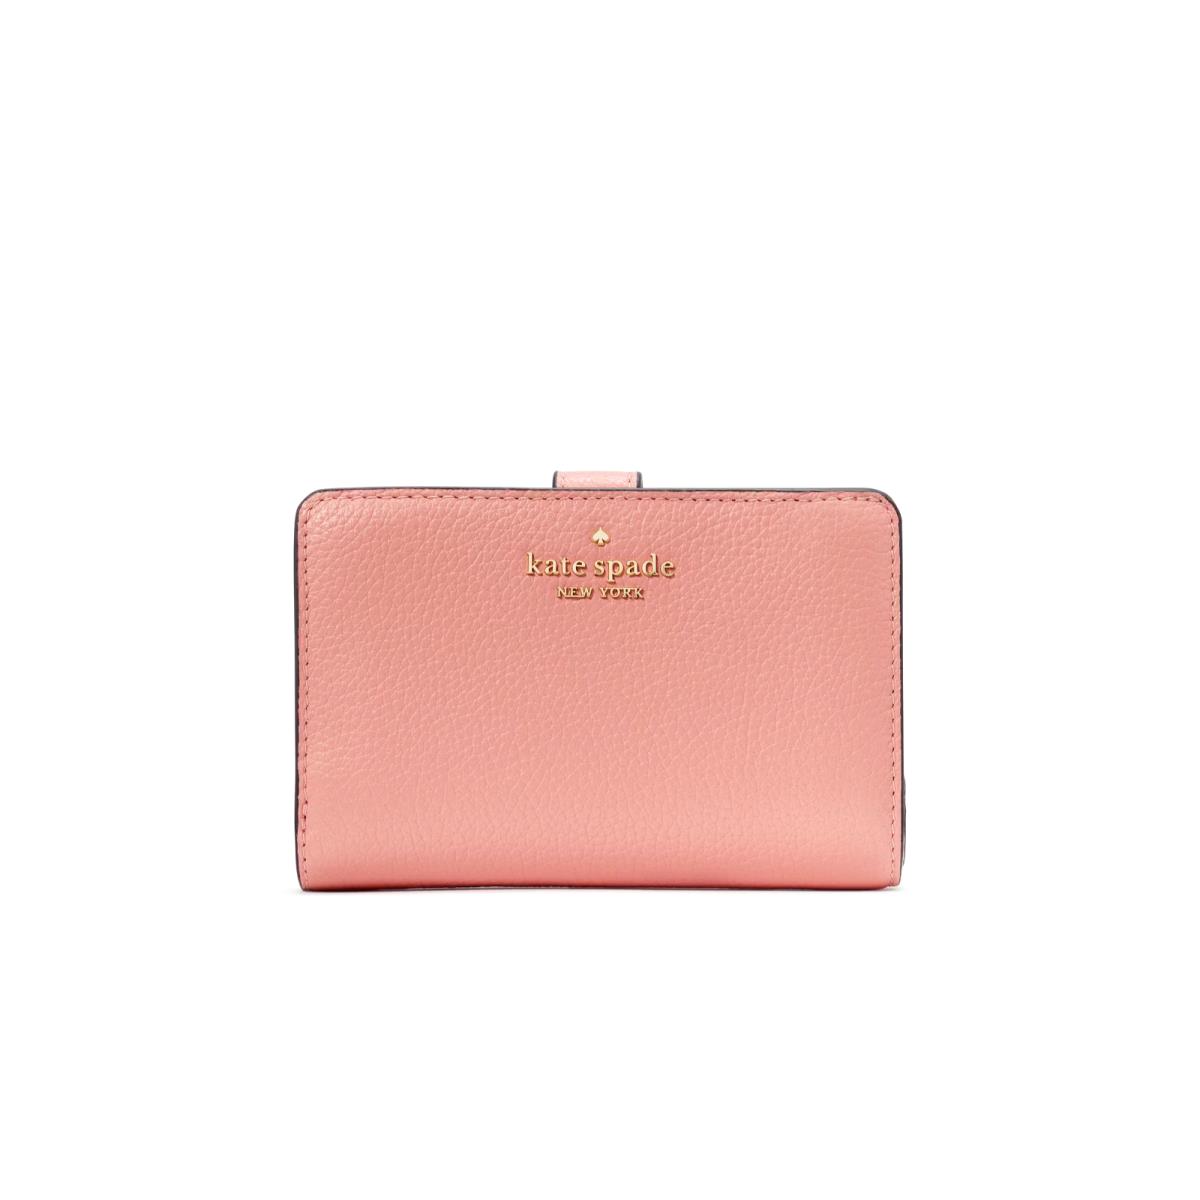 Kate Spade Leila Medium Compact Bifold Wallet Peachy Rose Pebble Leather